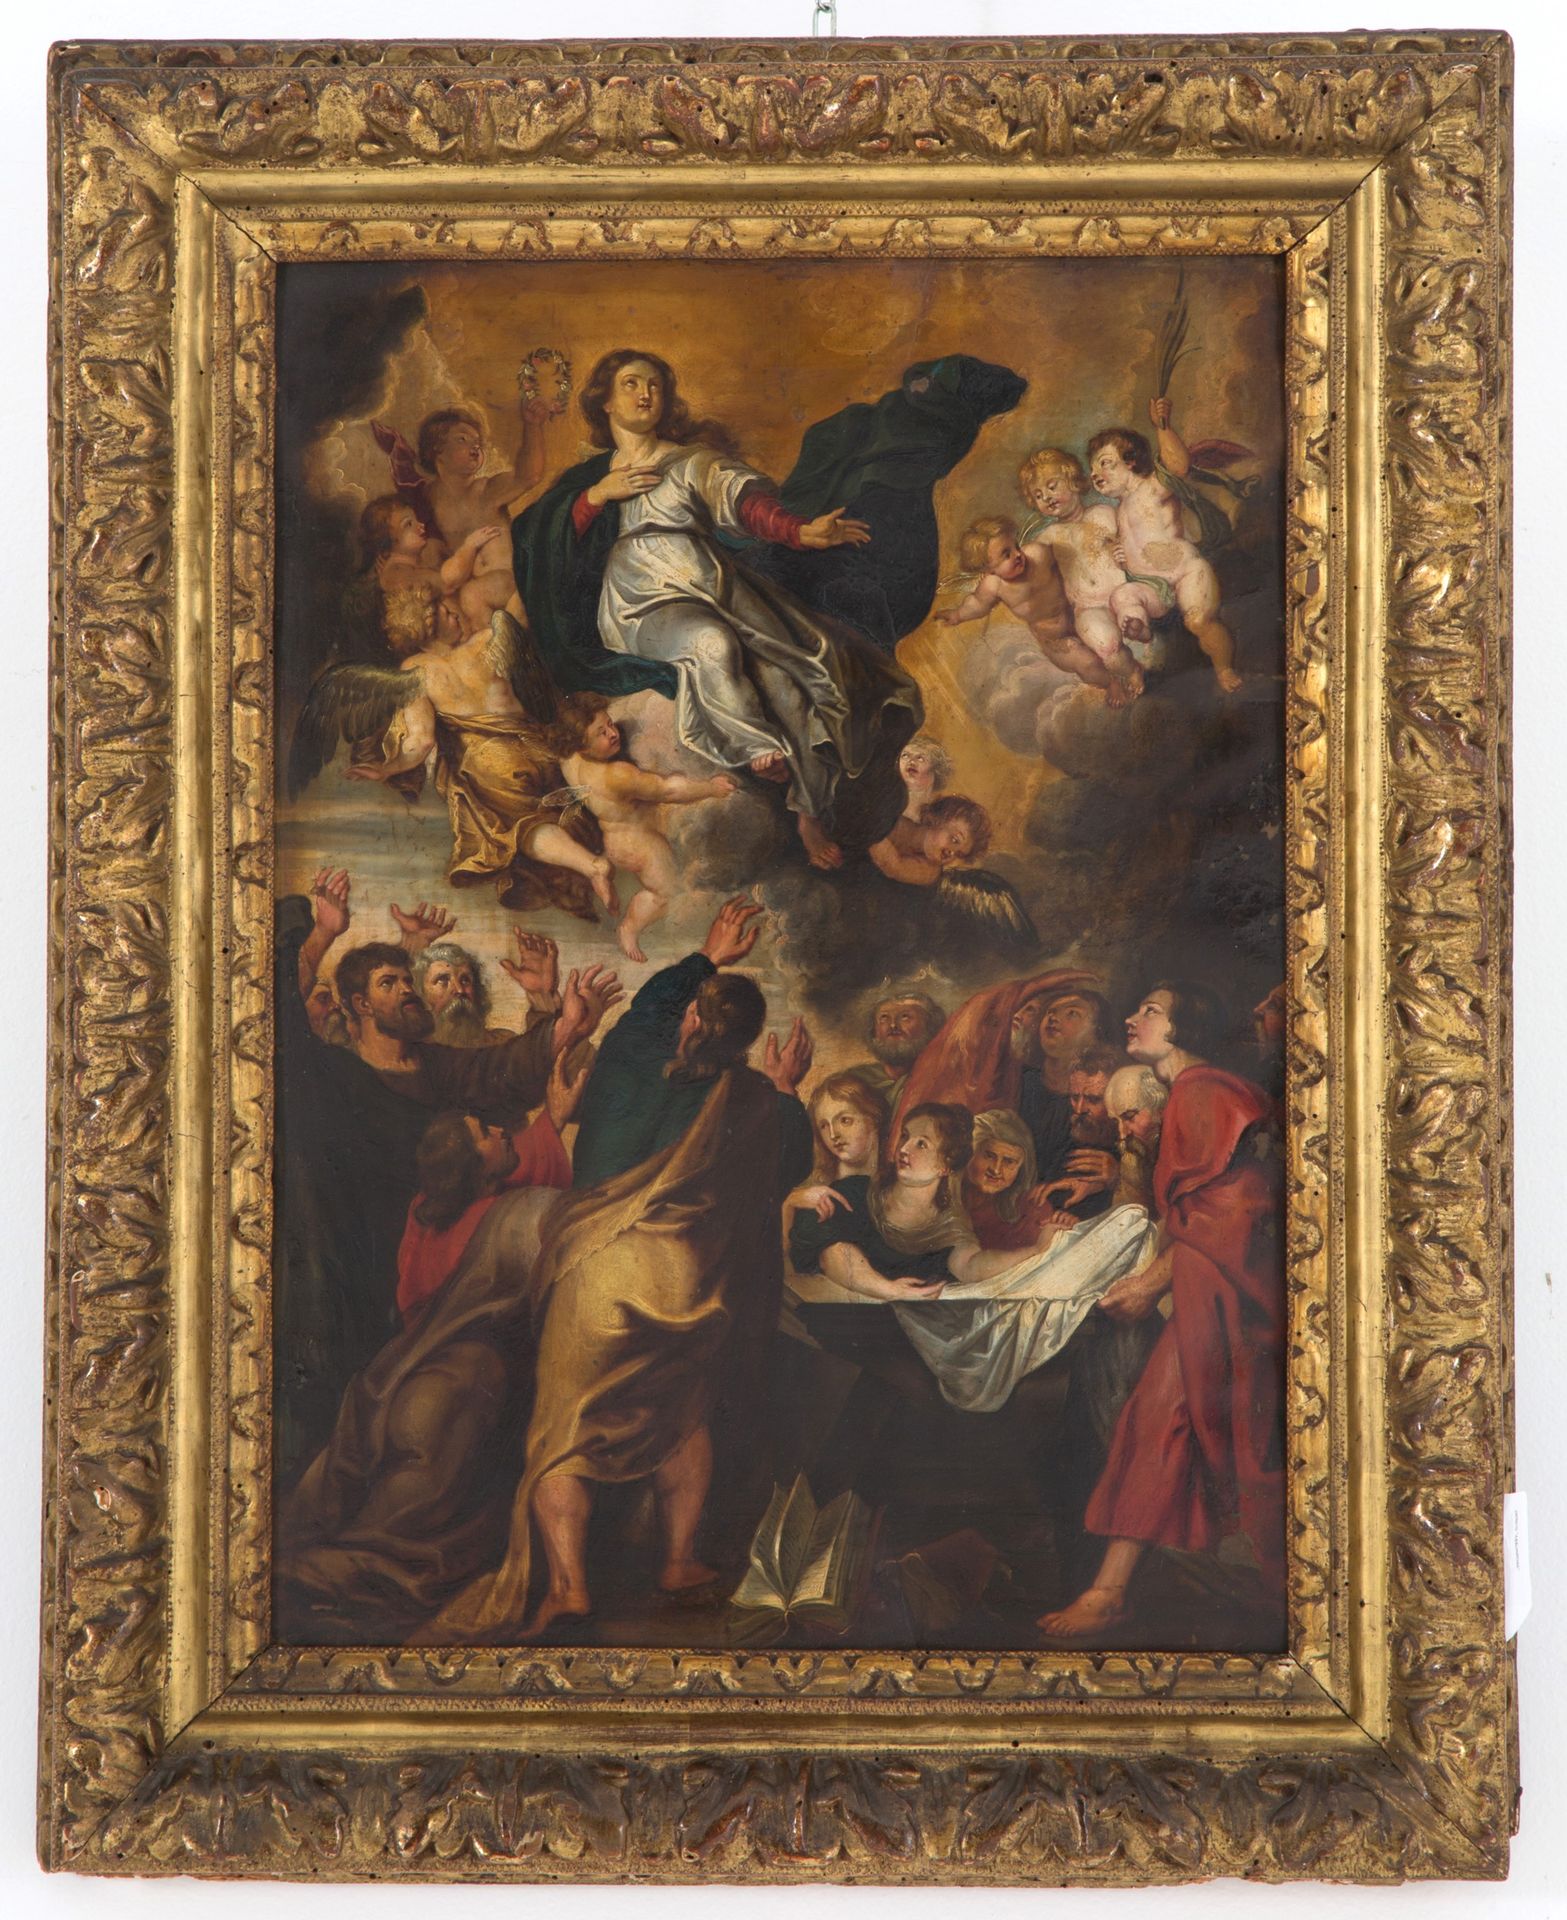 Painting "ASSUMPTION" 描绘 "圣母升天 "的铜制油画。作者：彼得-保罗-鲁本斯。17世纪。缺陷和修复。53x39厘米左右。